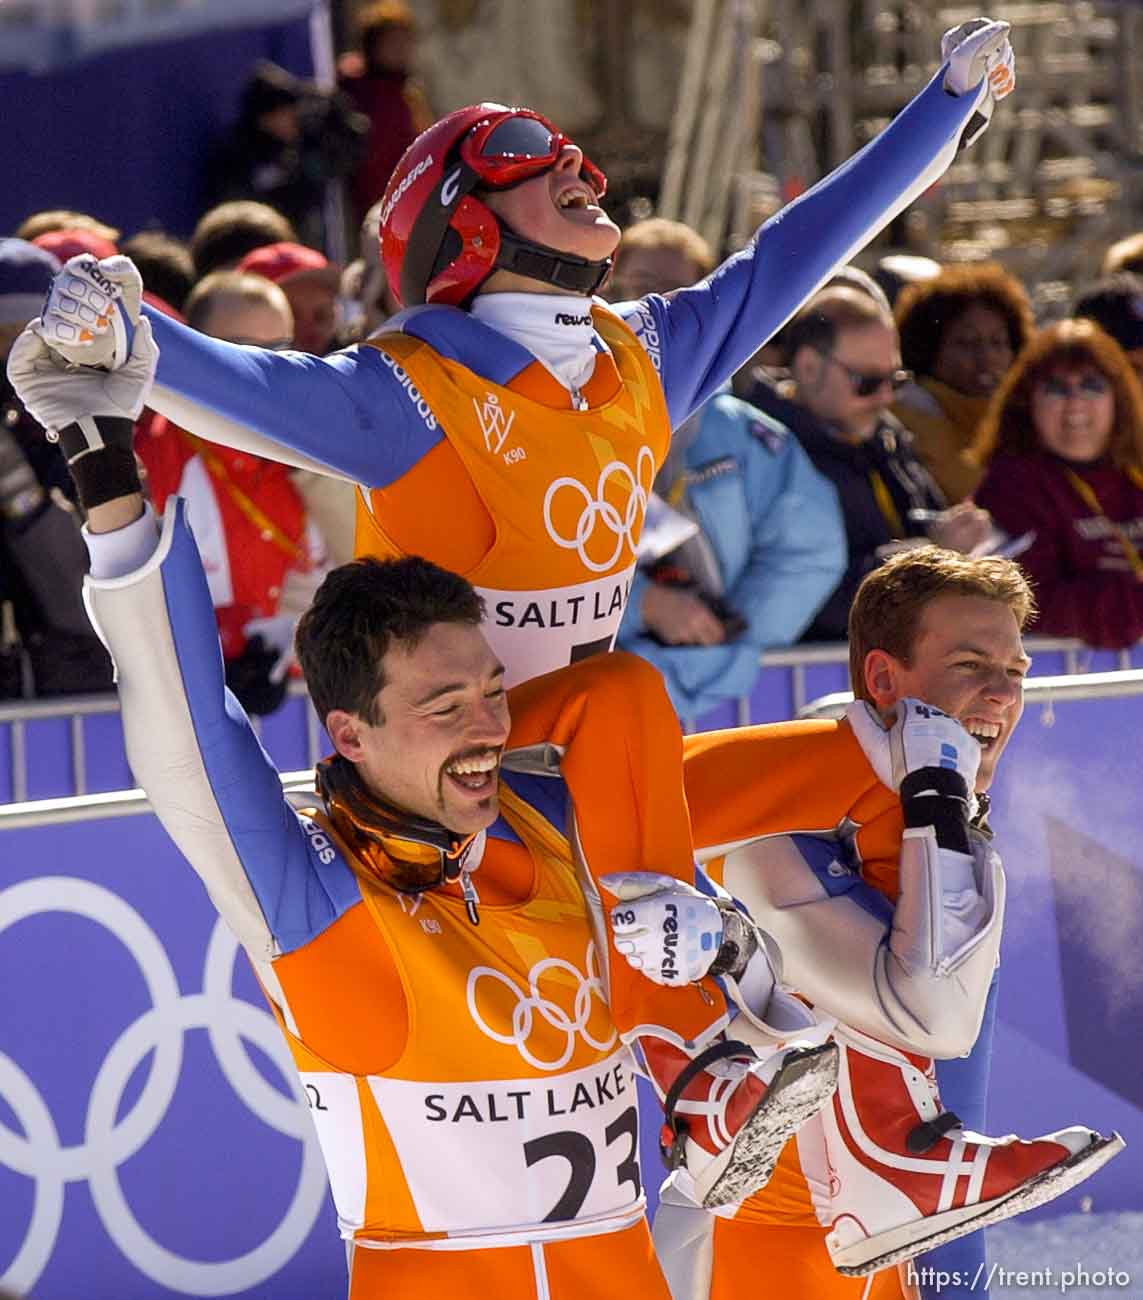 Ski Jump Medalists